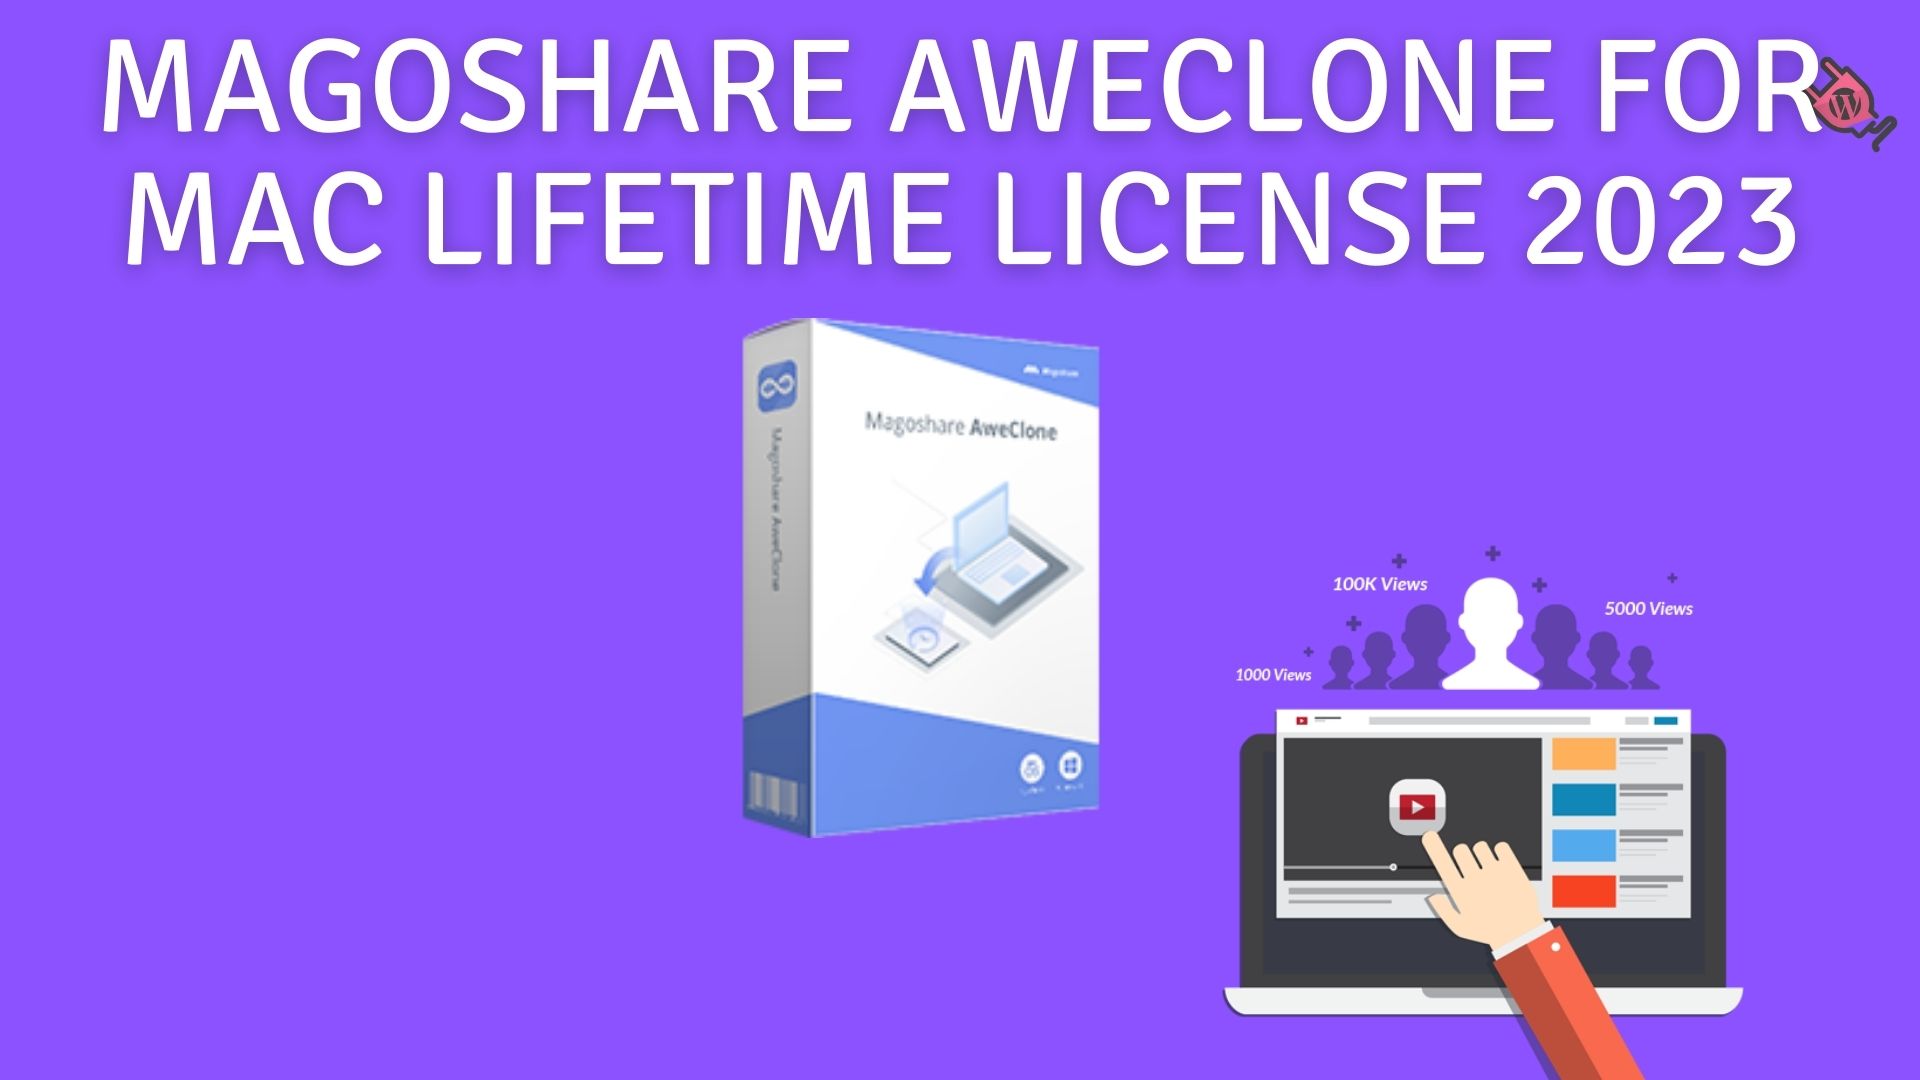 Magoshare aweclone for mac lifetime license 2023